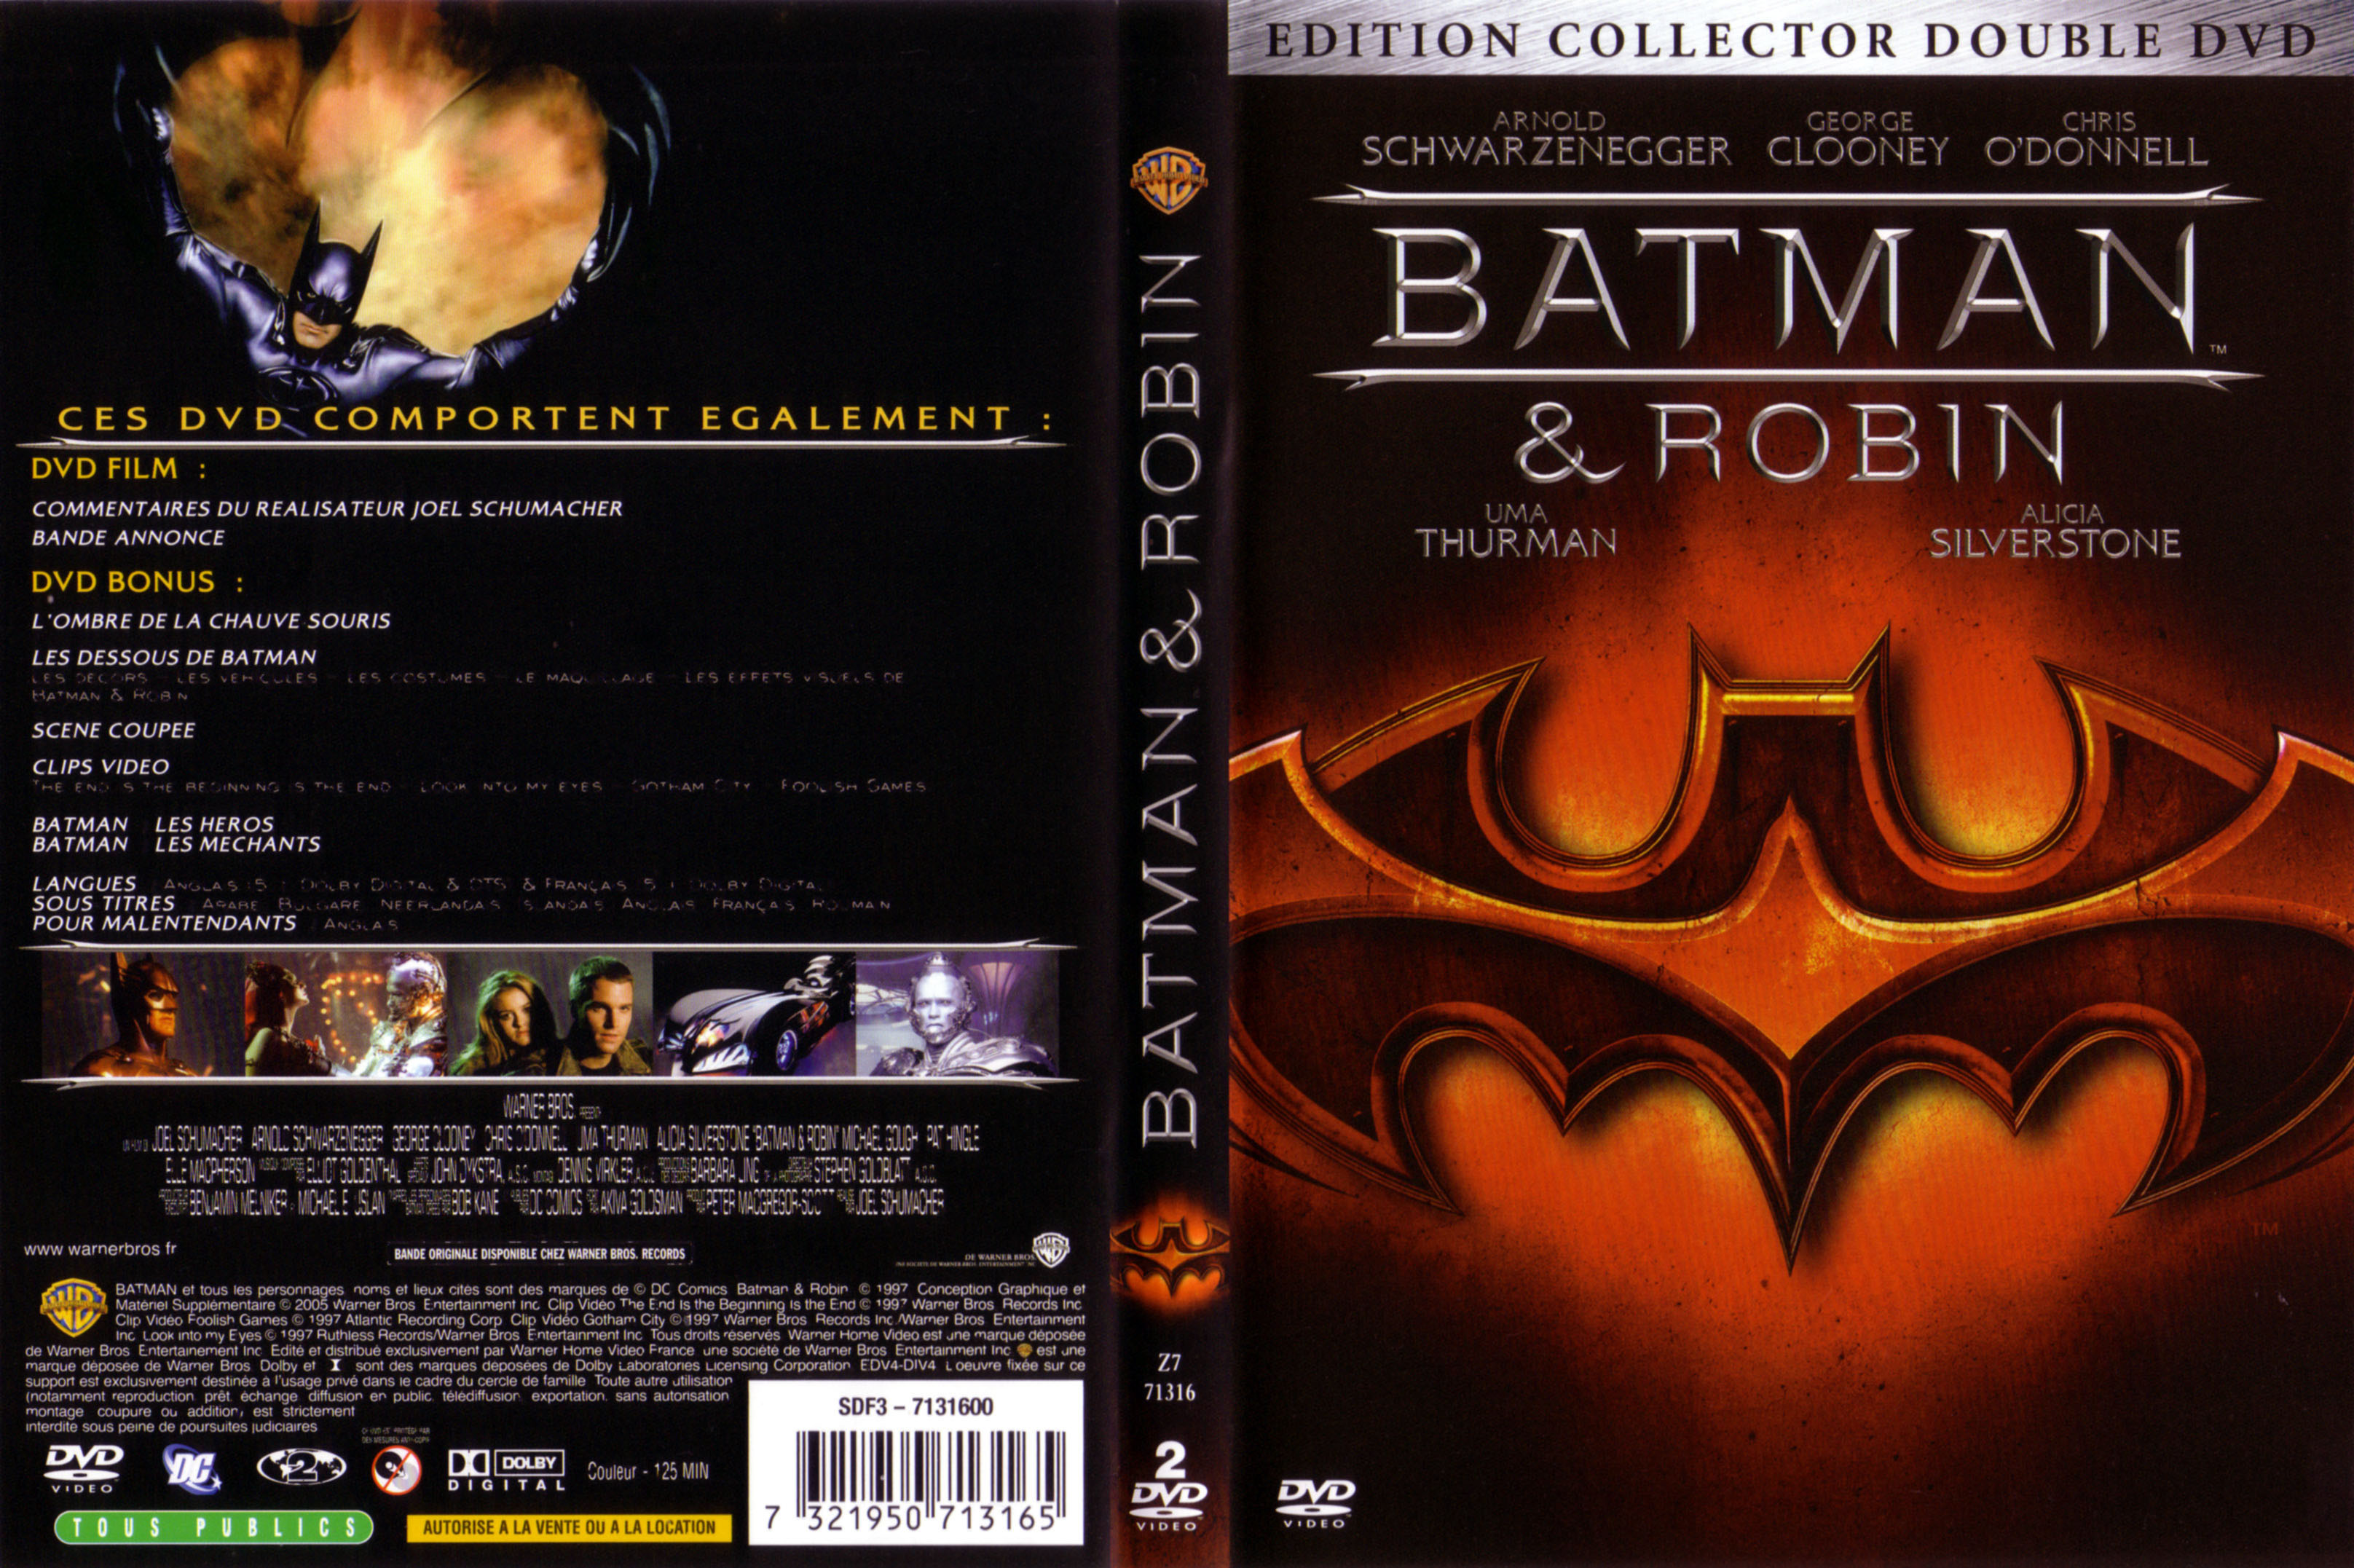 Jaquette DVD Batman et robin v2